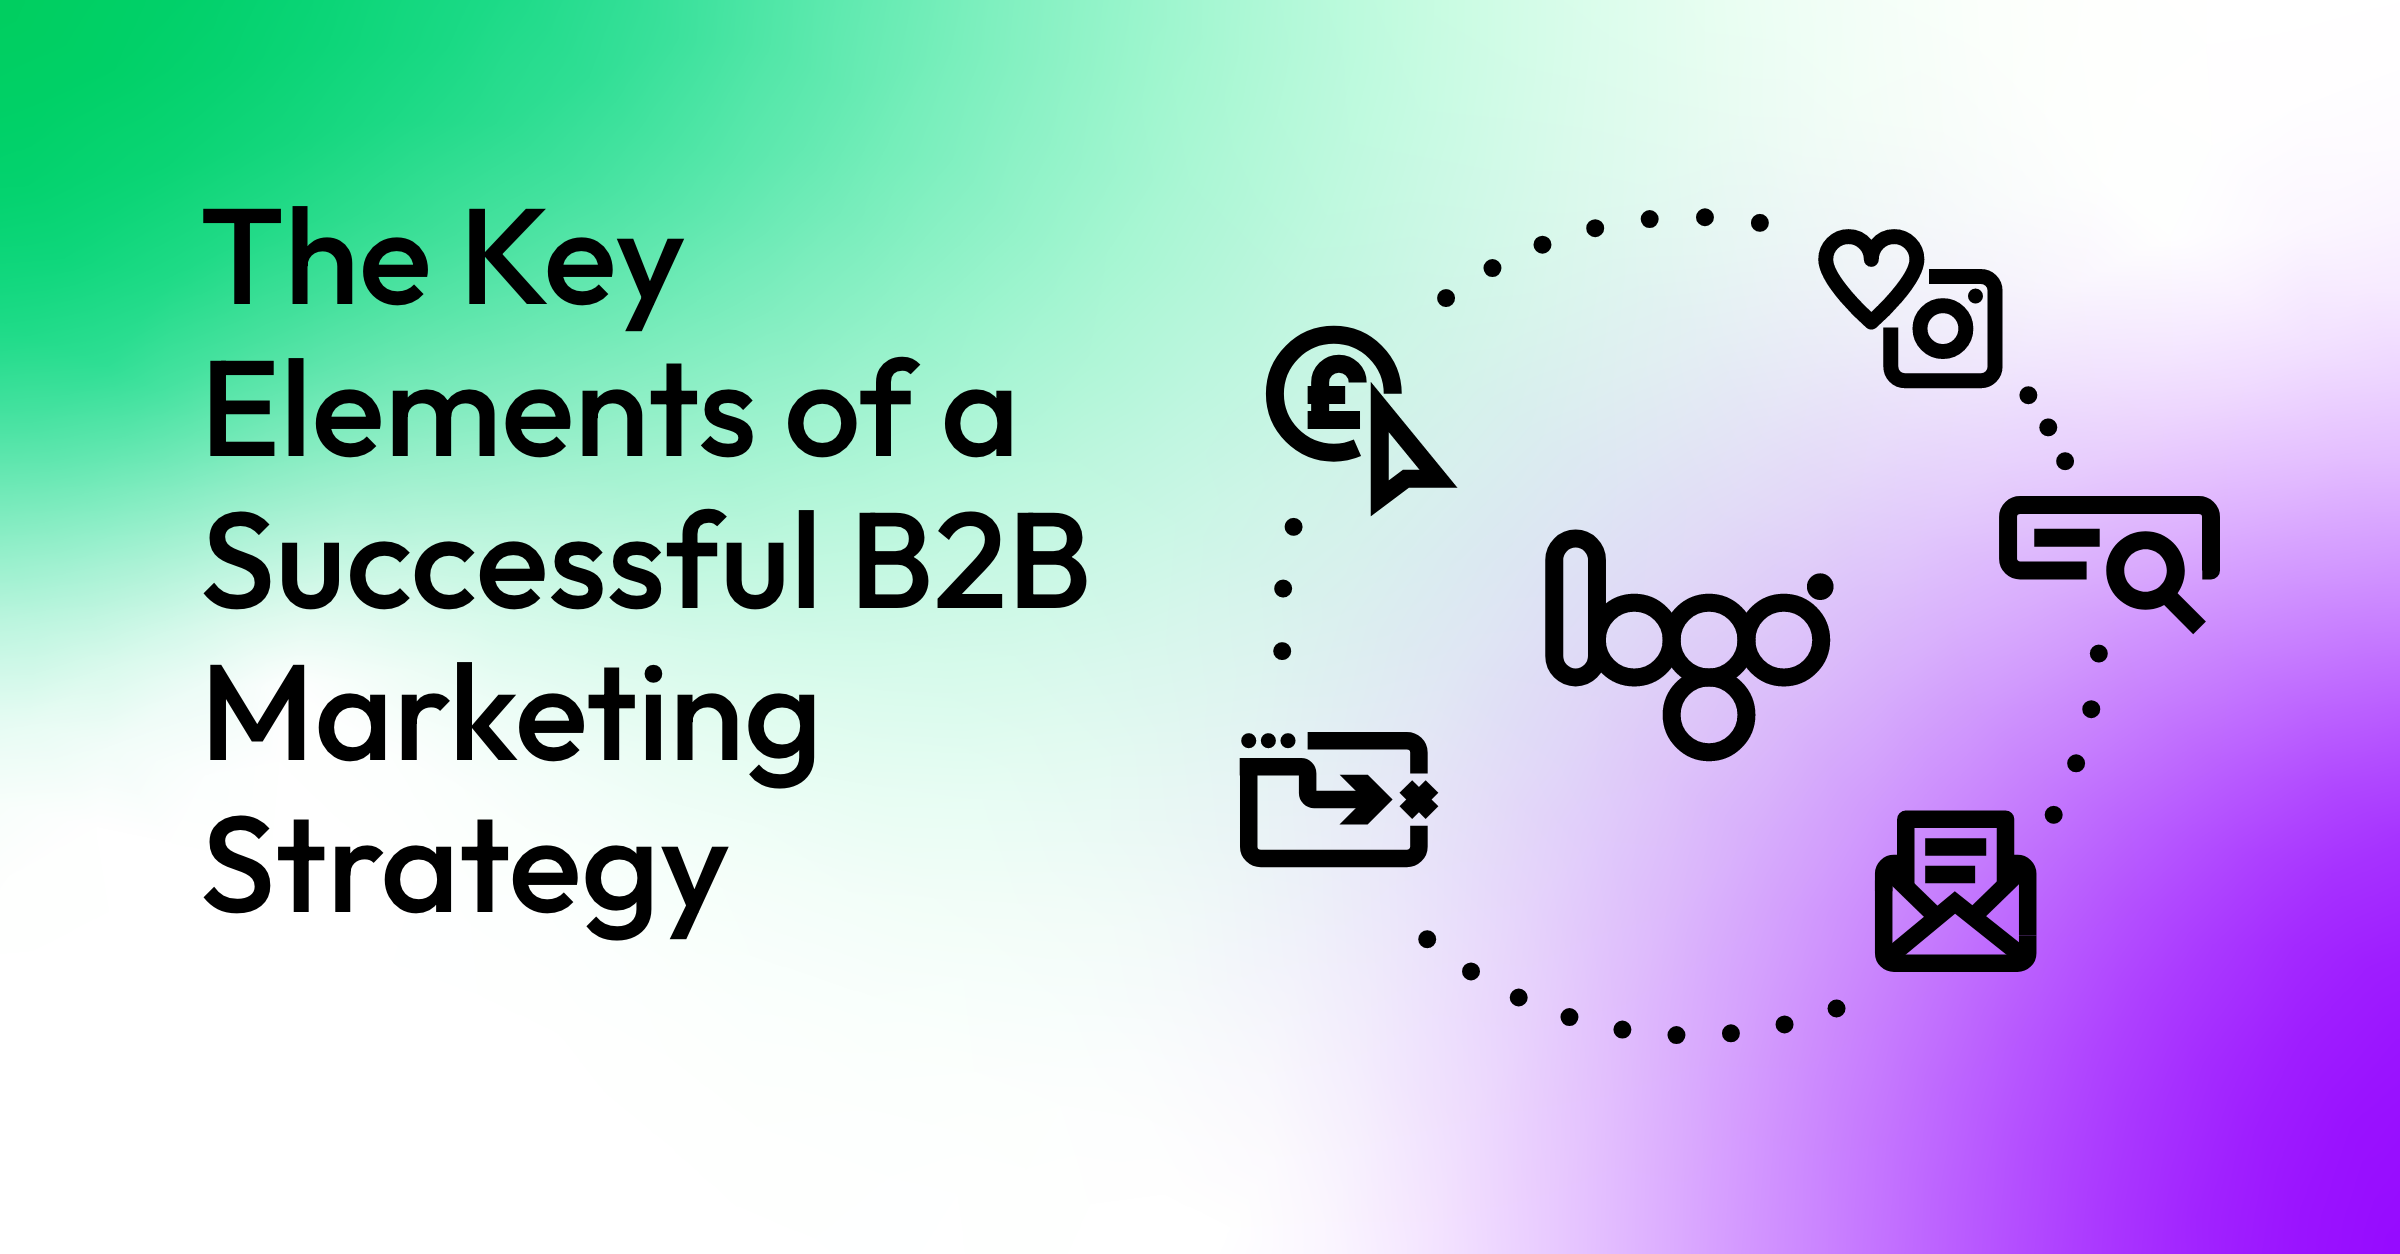 The Key Elements of a Successful B2B Marketing Strategy